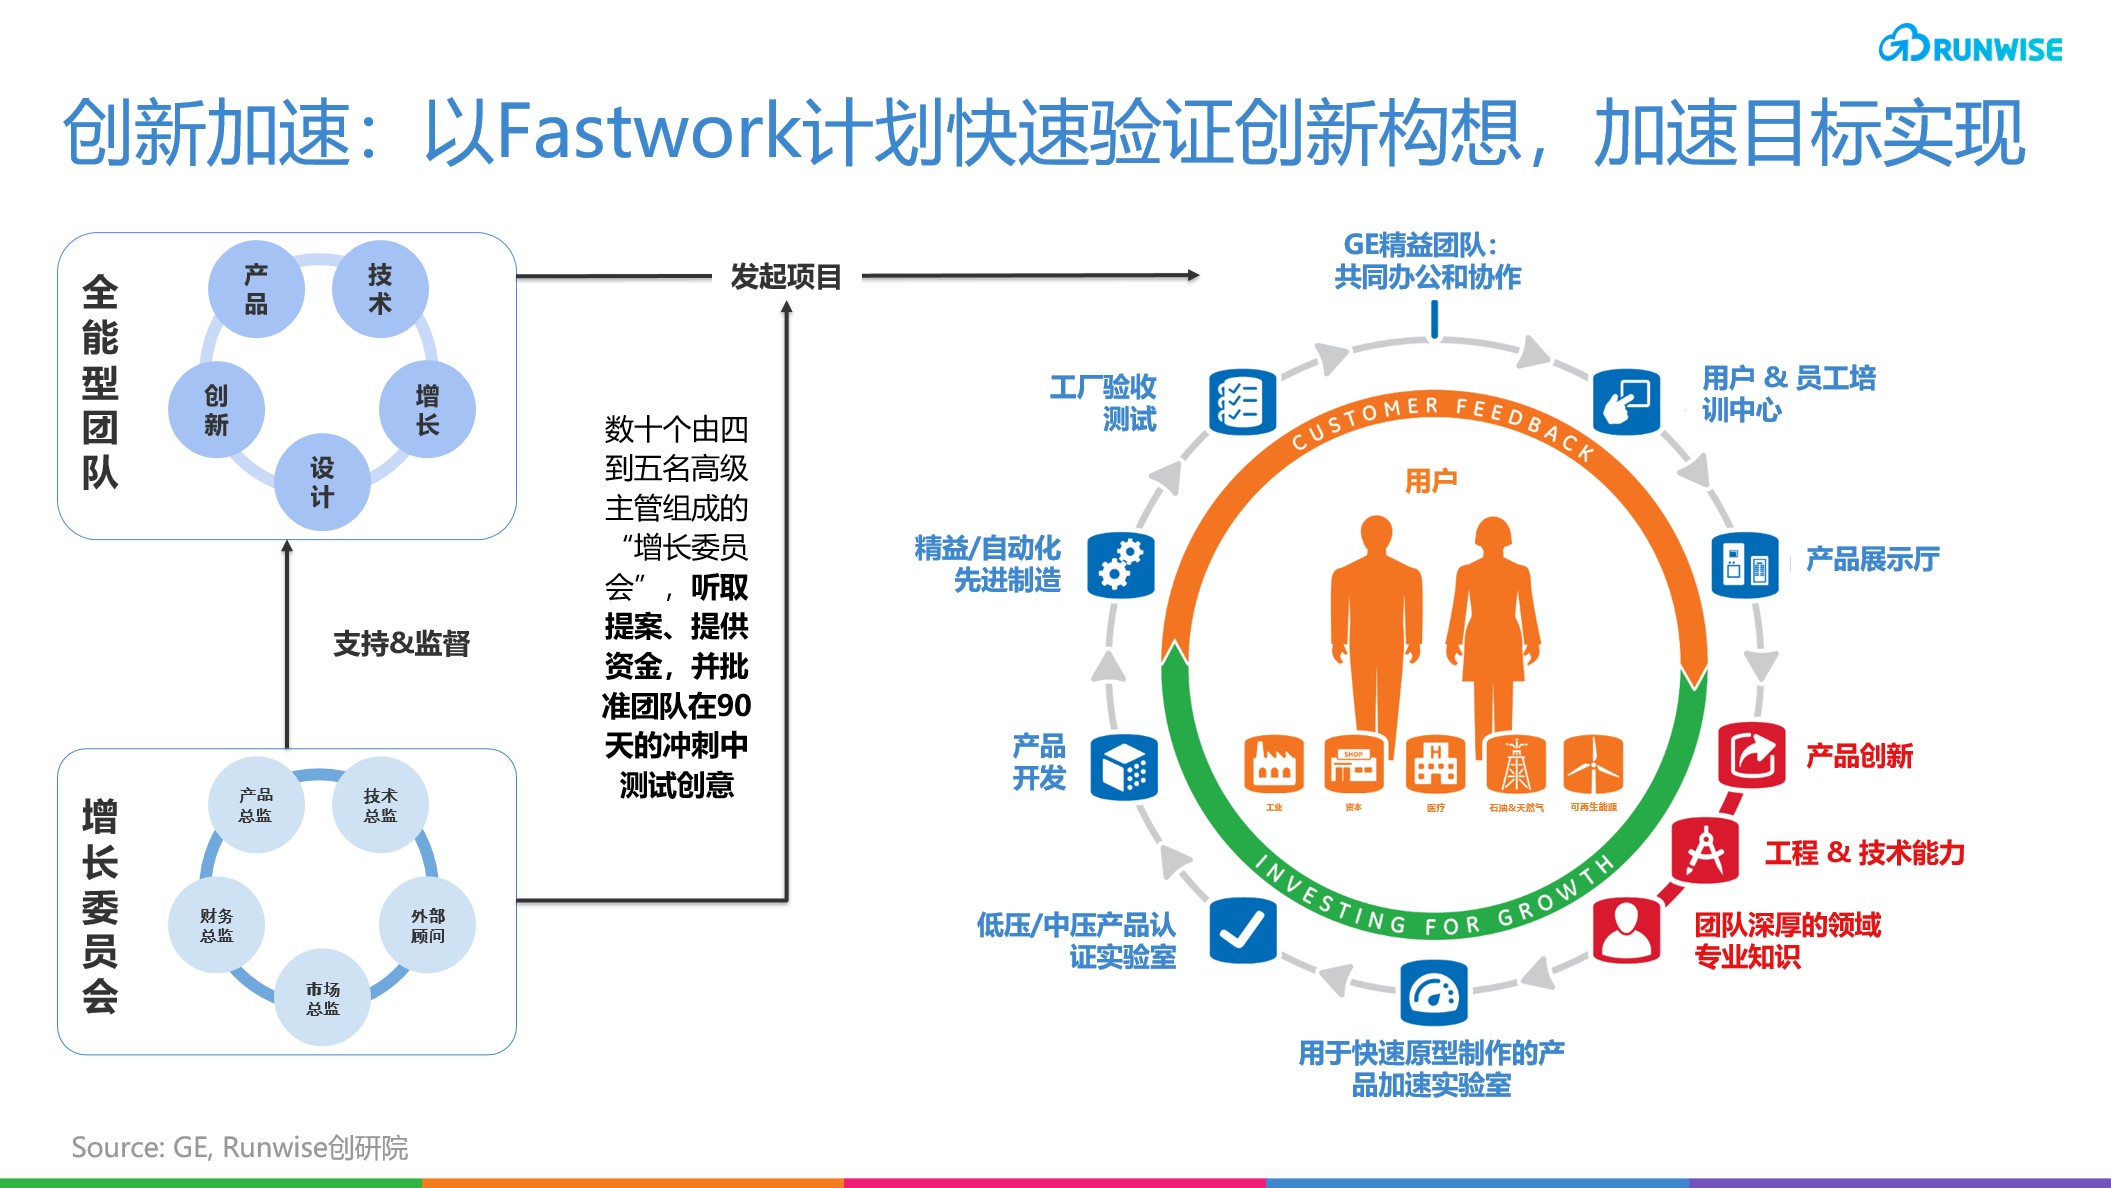 GE Fastworks - 创新加速